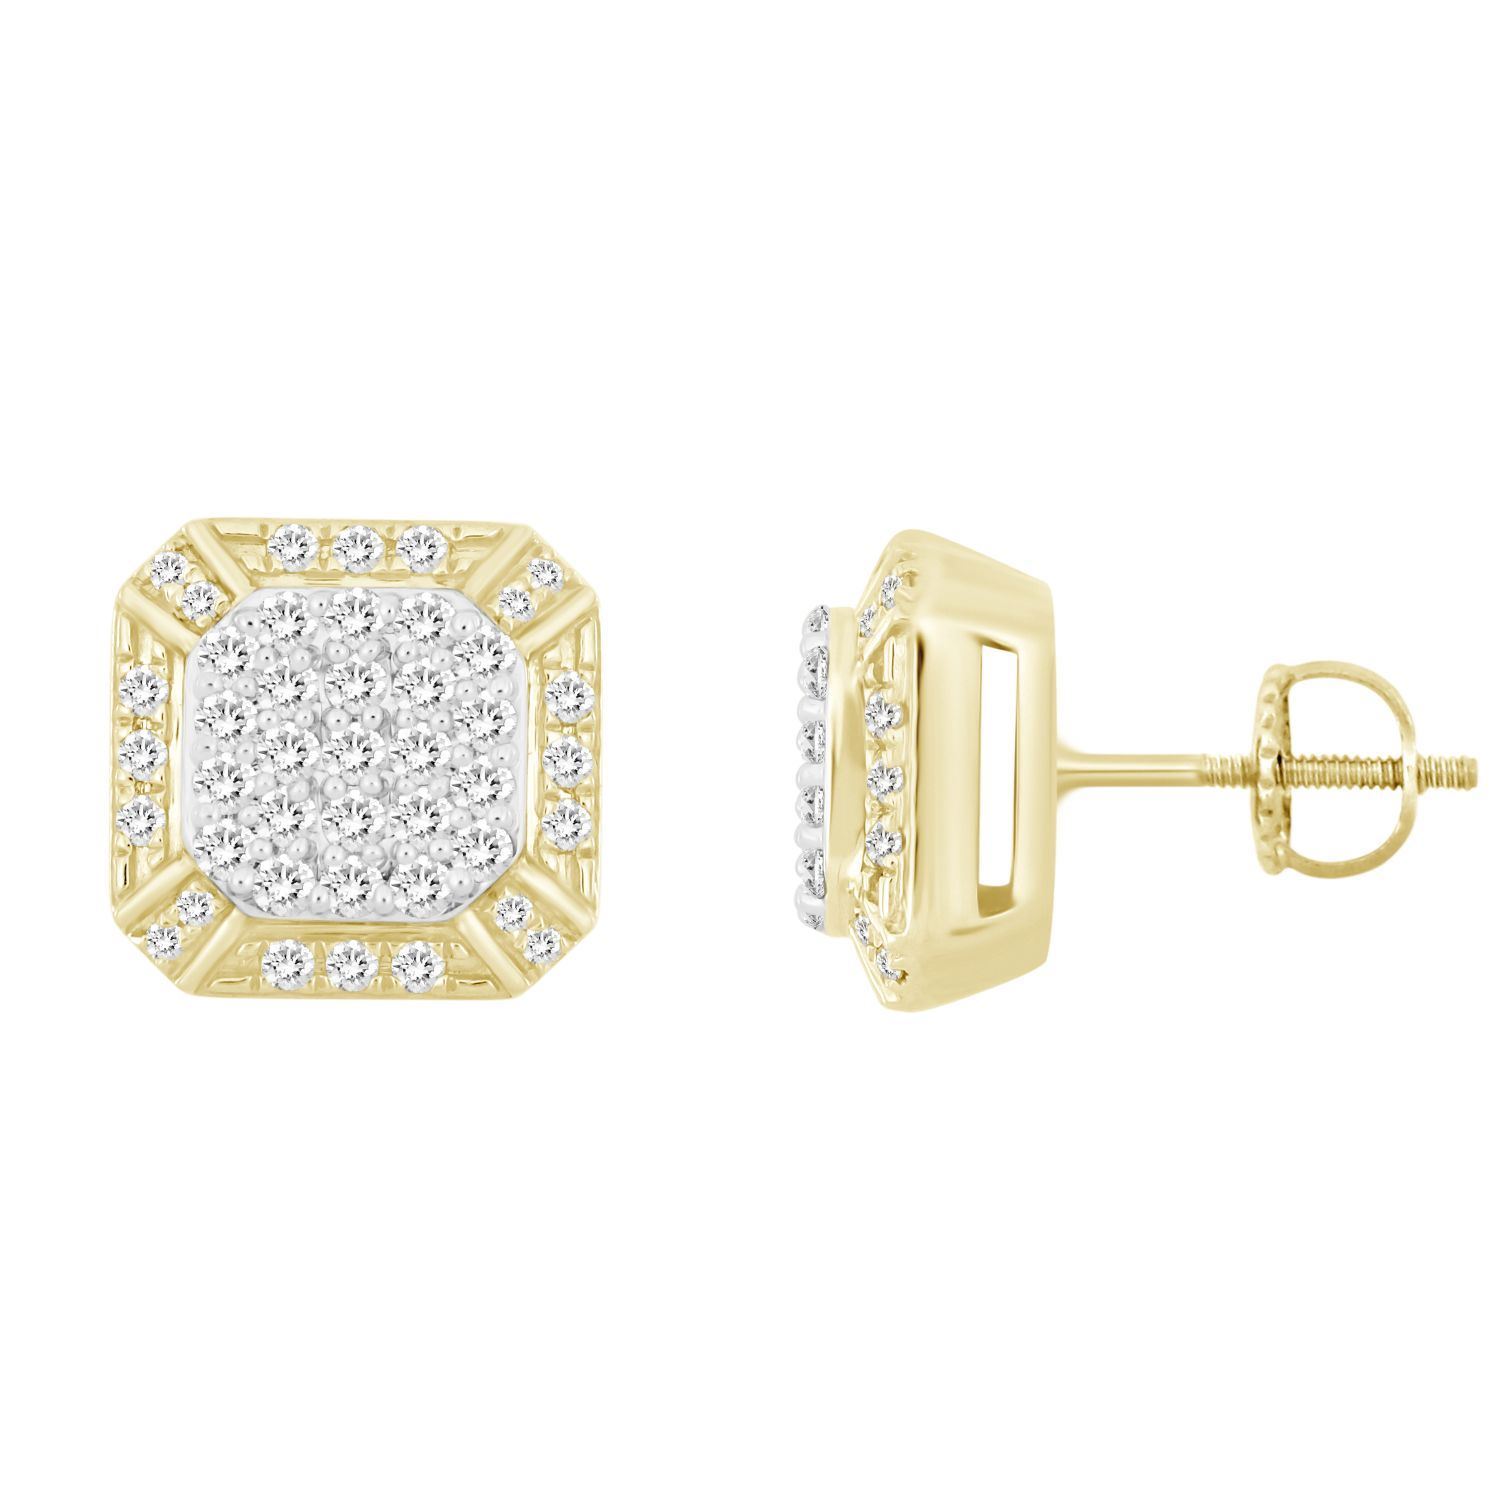 0013213_mens-earring-1-ct-round-diamond-10k-yellow-gold.jpeg